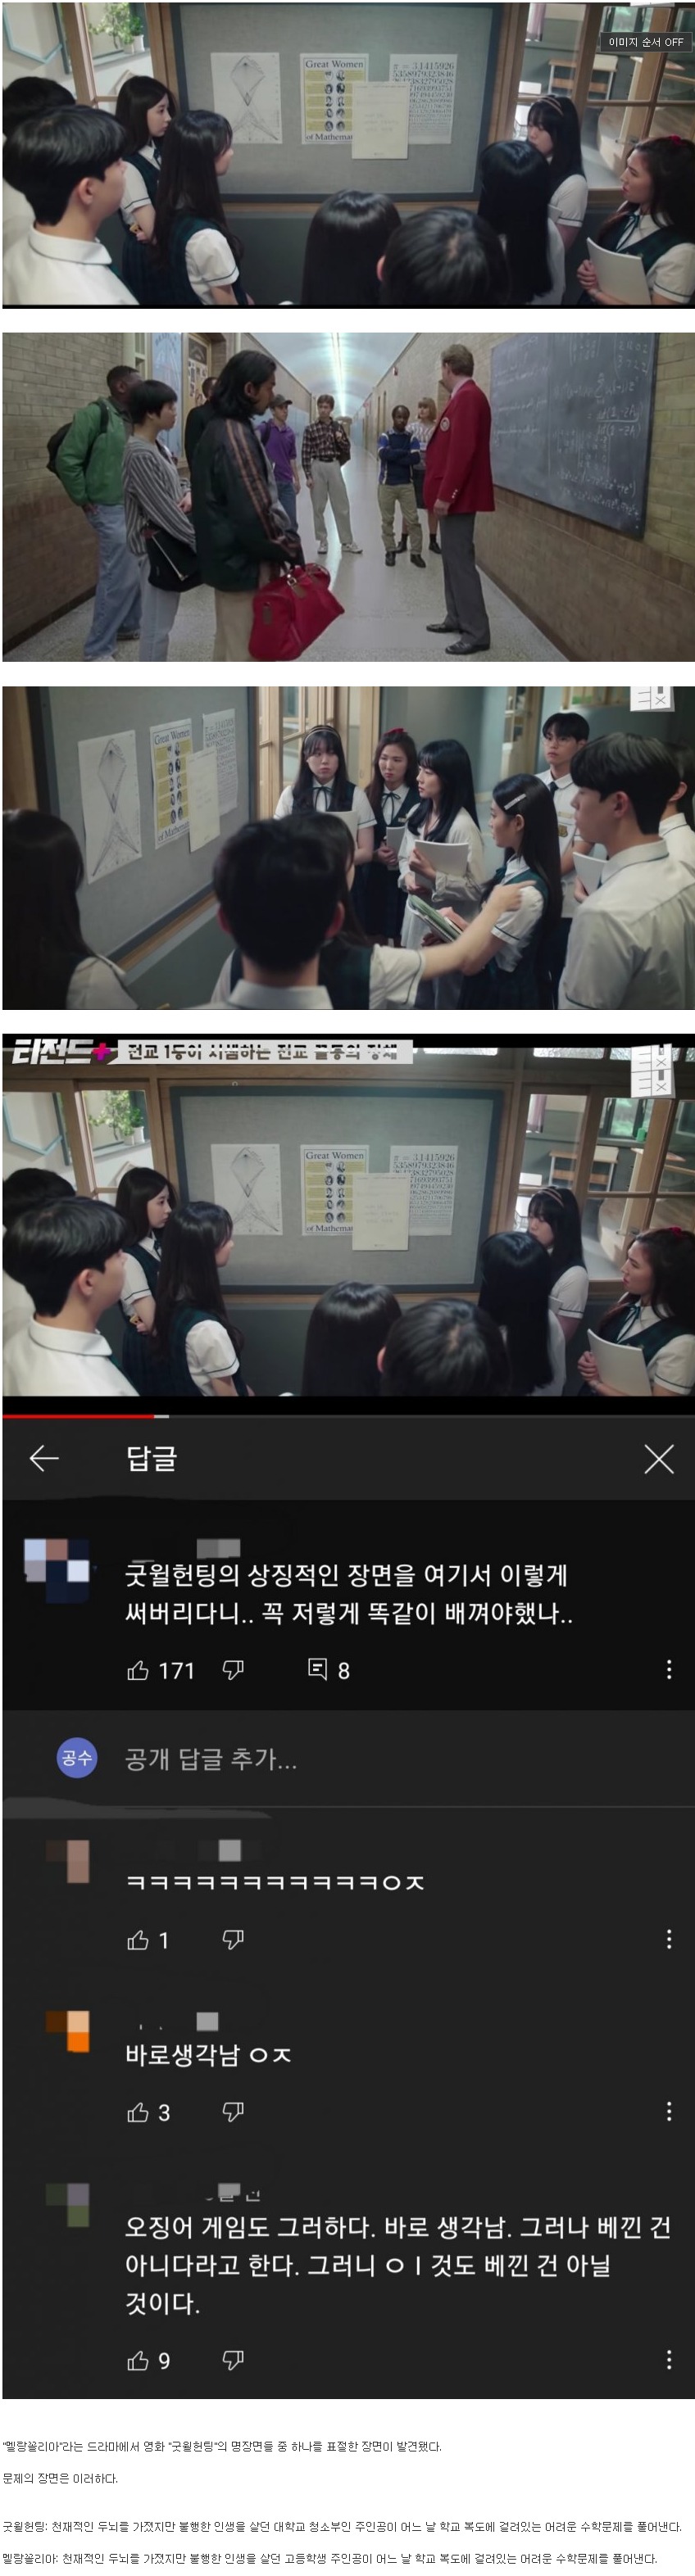 K-드라마 미국영화 표절 논란